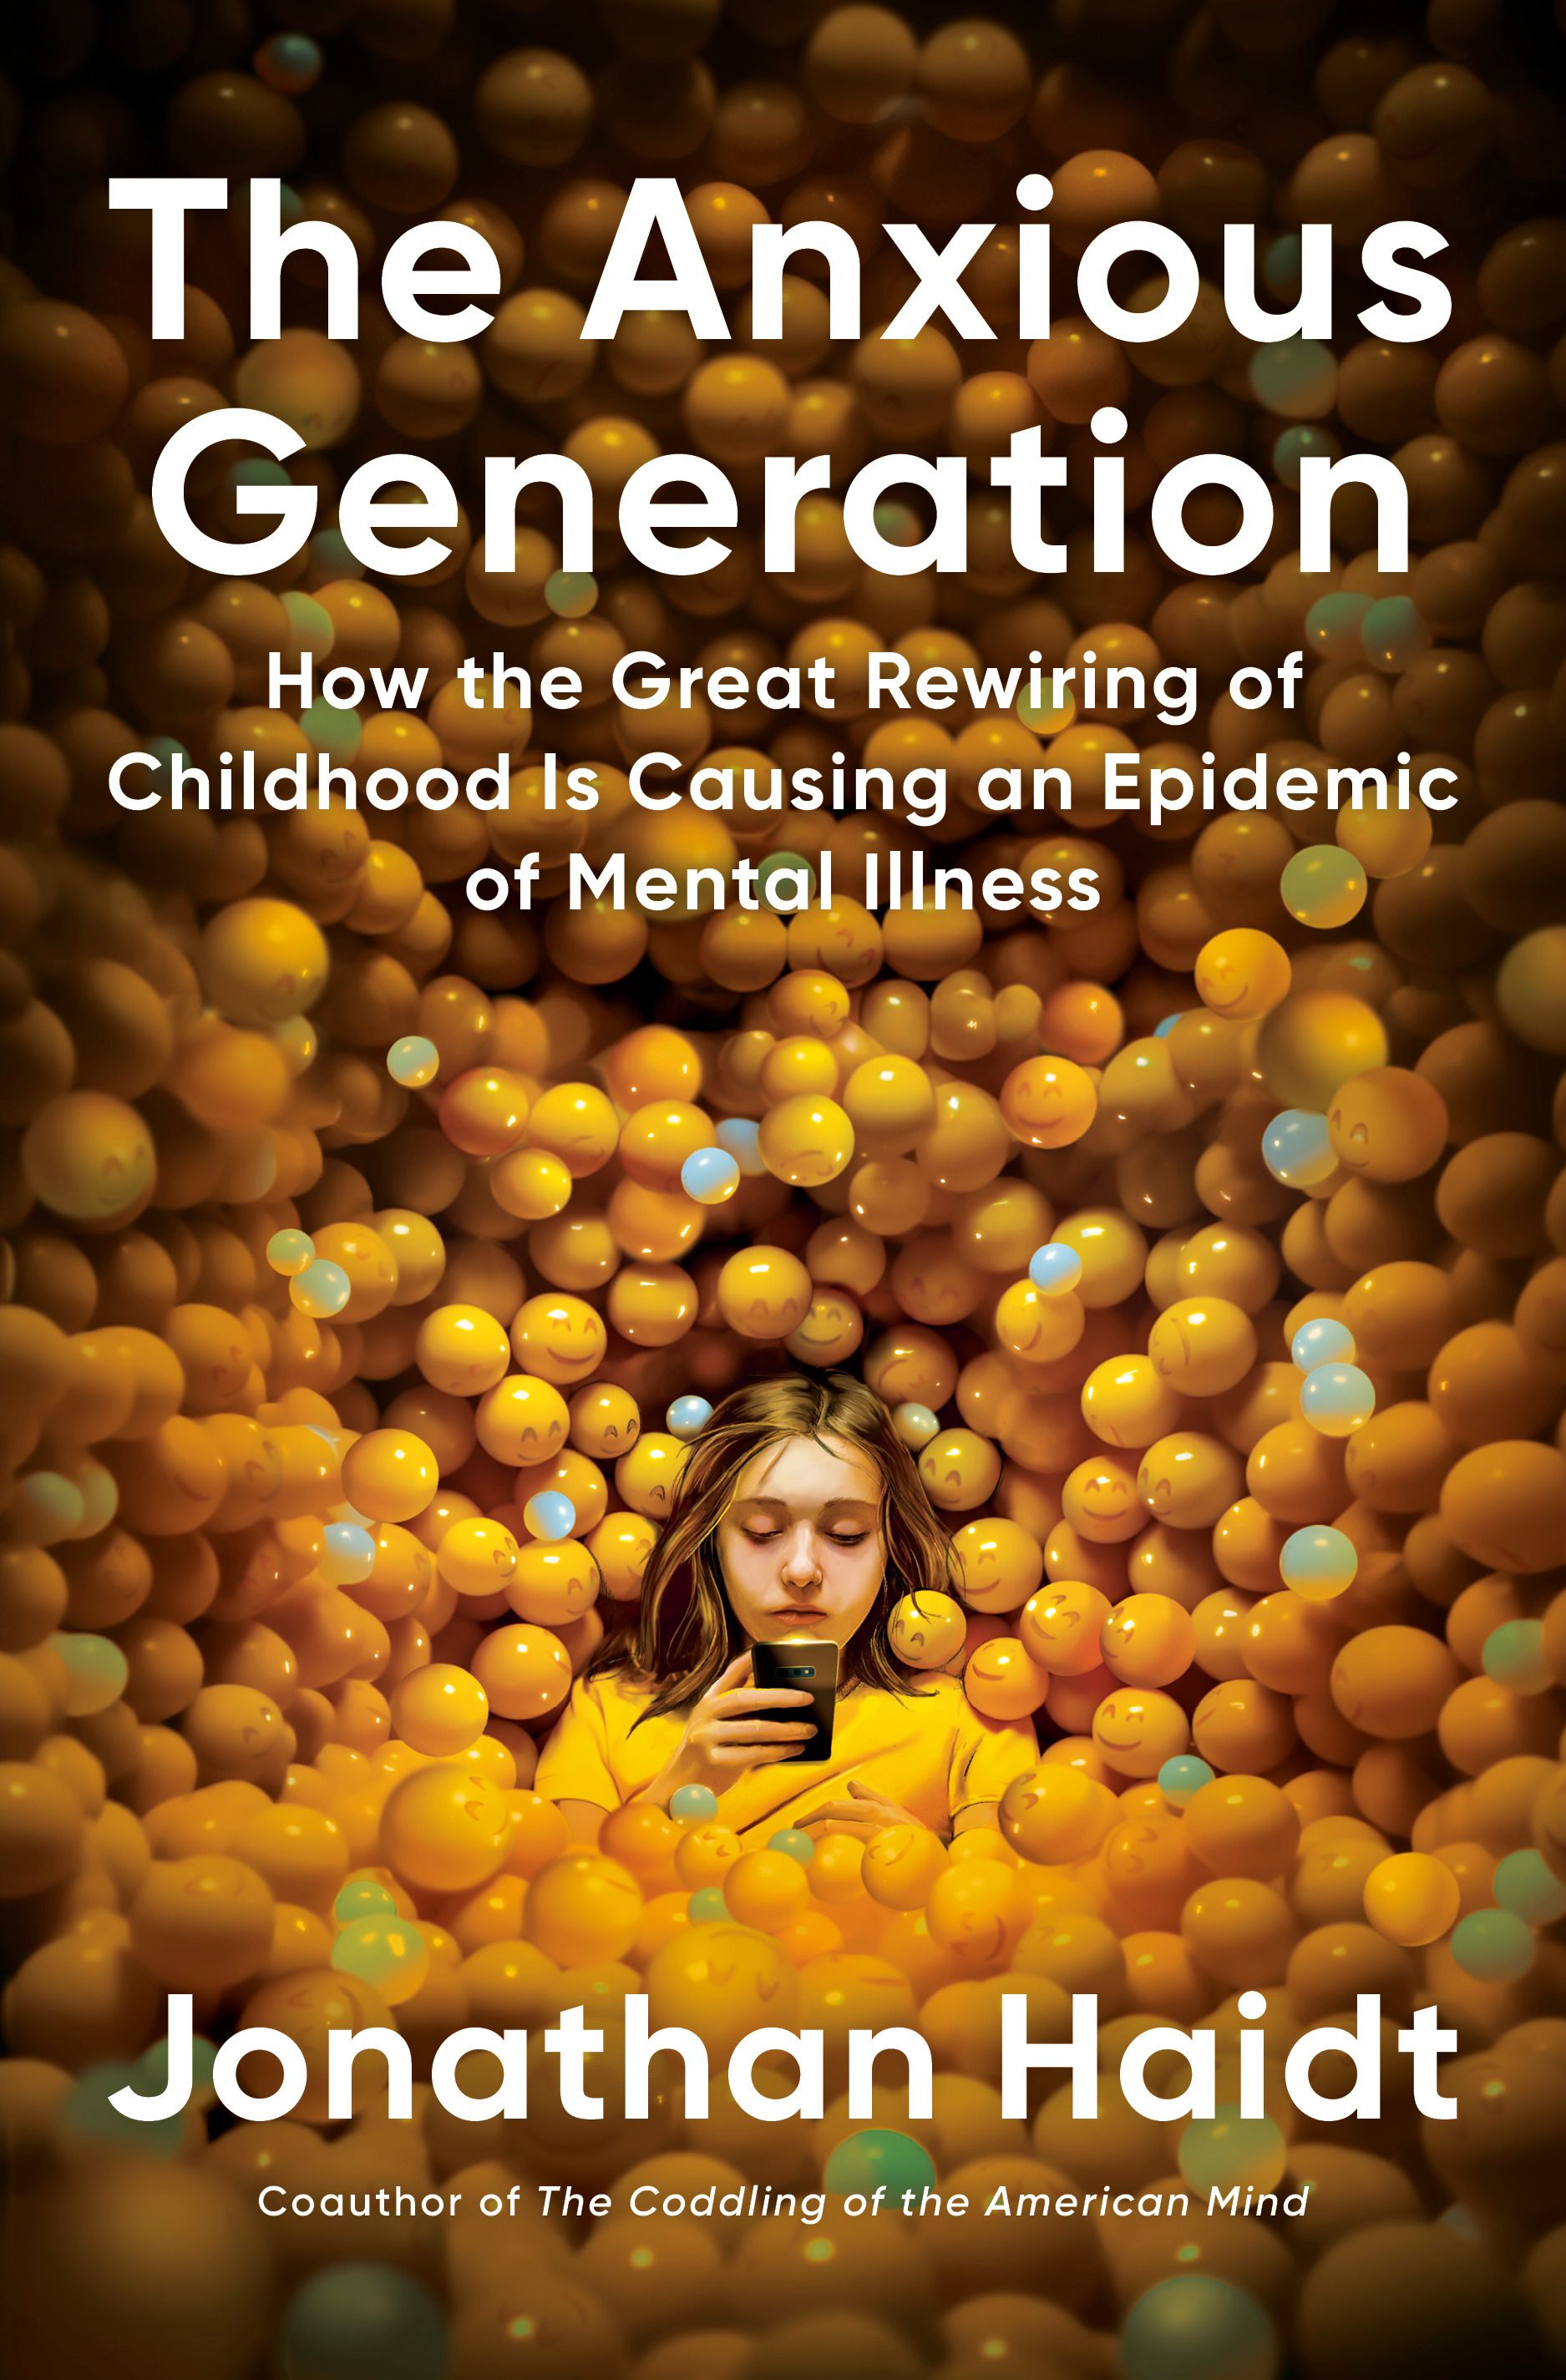 The Anxious Generation Book Summary